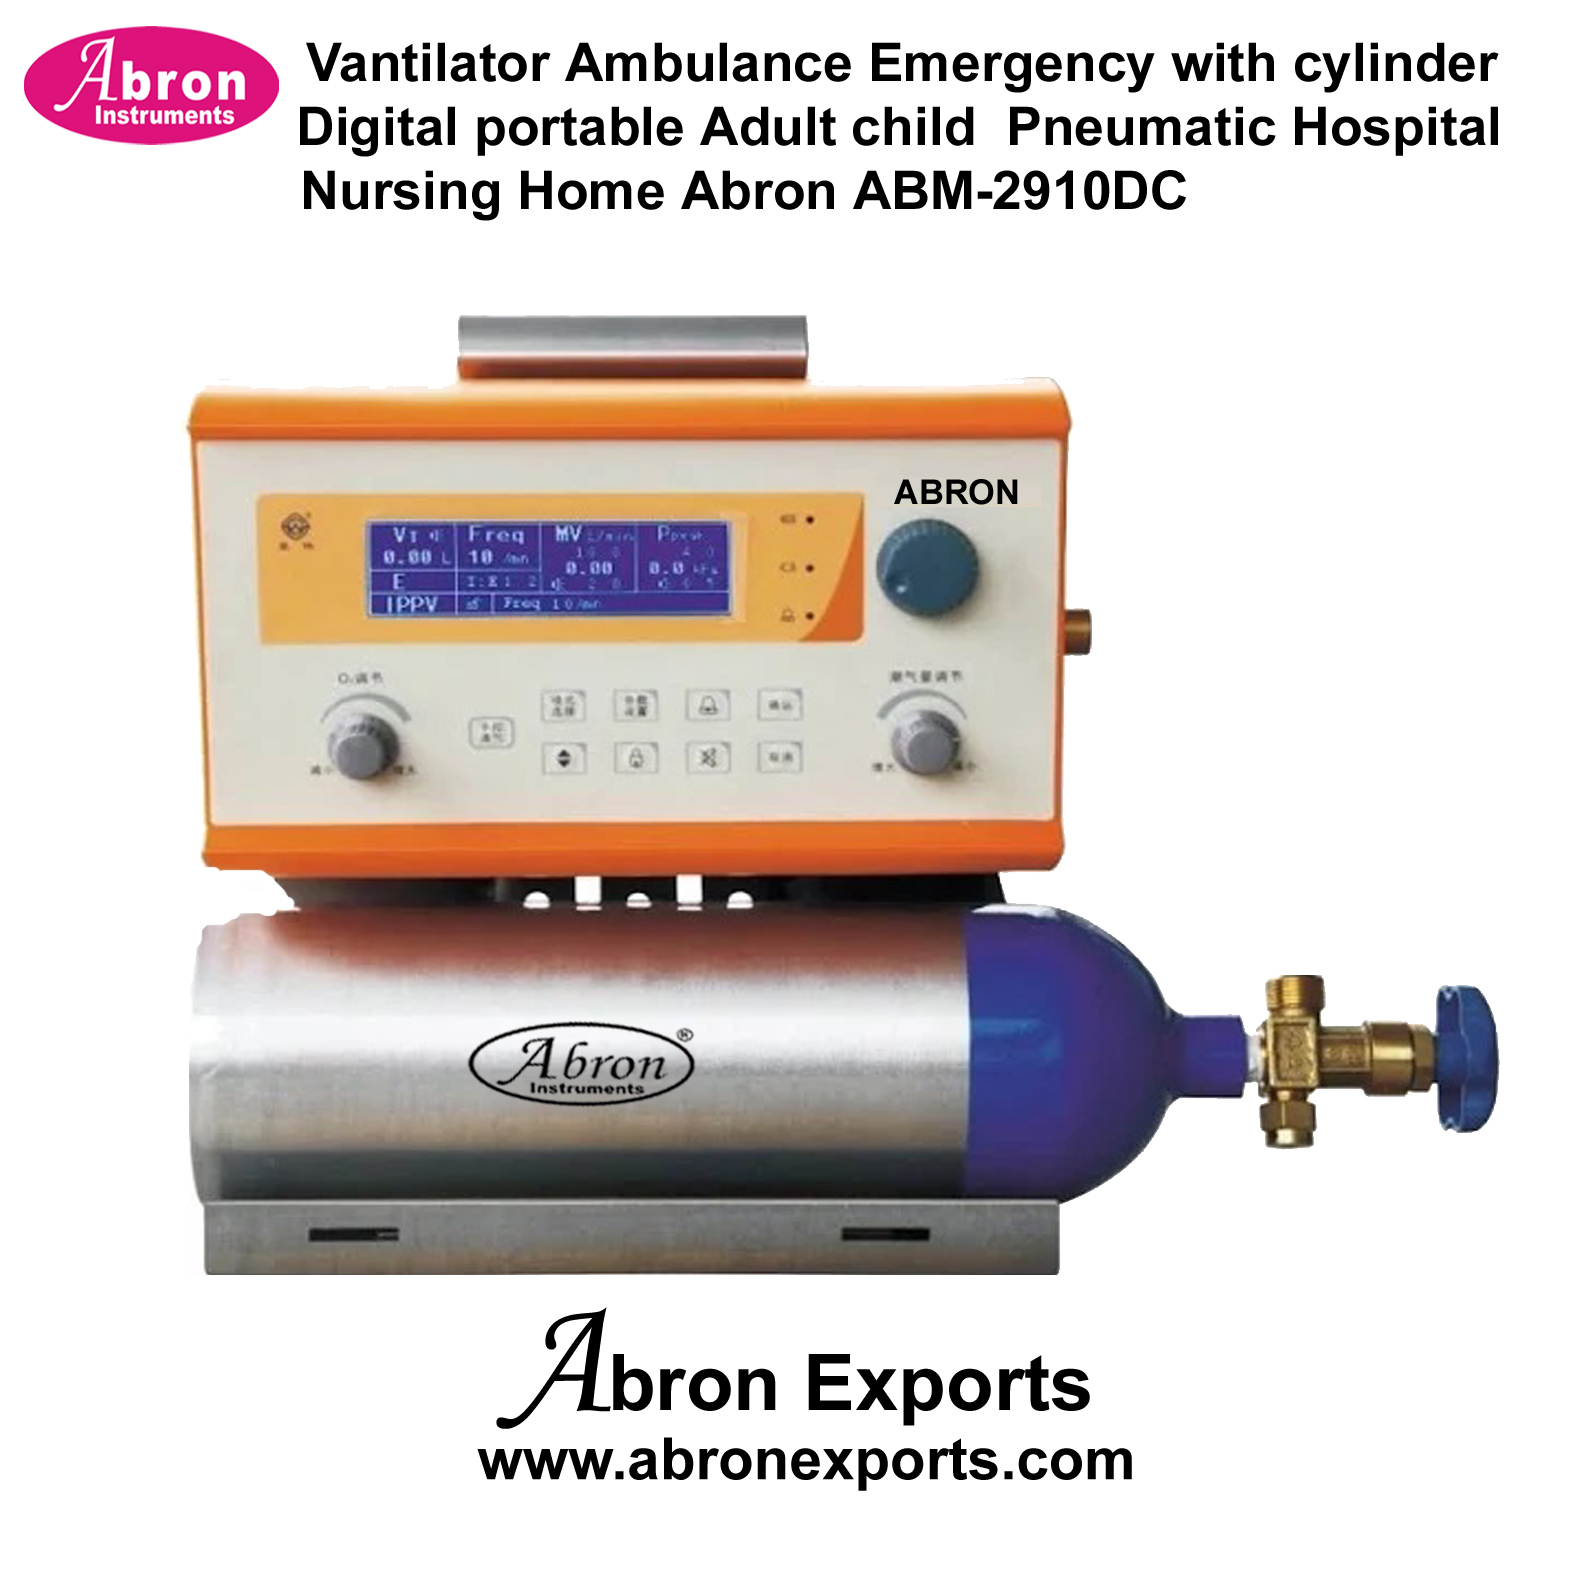 Vantilator Ambulance Emergency with Cylinder Digital Portable Adult Child Pneumatic Hospital Nursing Home Abron ABM-2910DC 